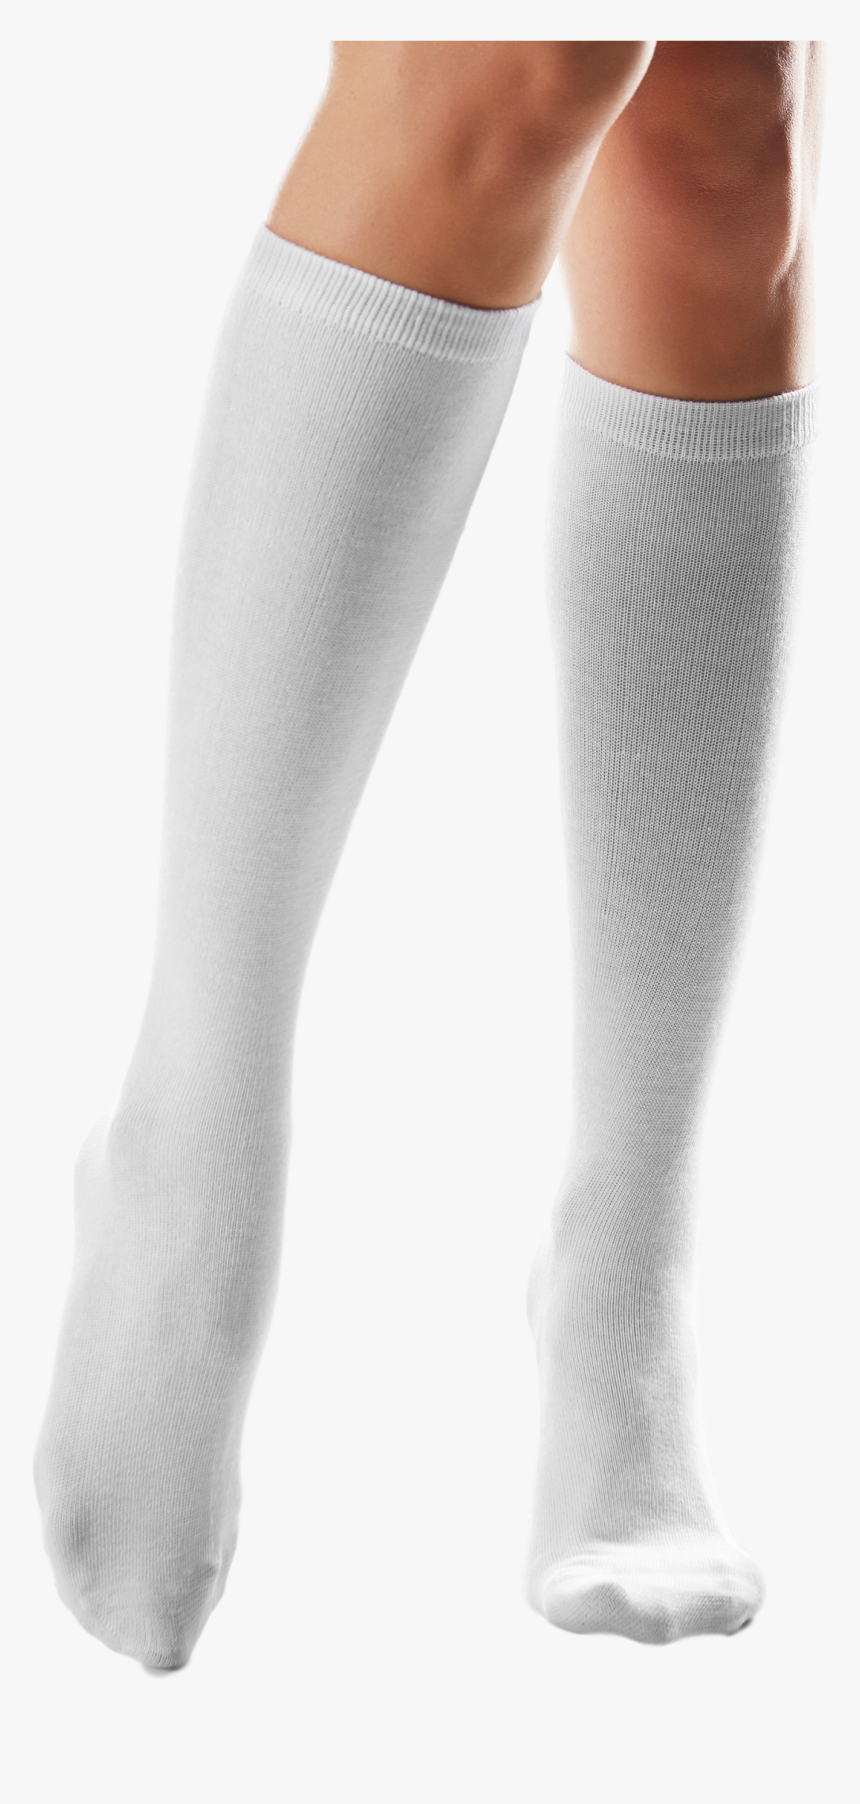 2 Pack Of Jettproof Seamless Knee High Socks - Knee High White Socks Transparent, HD Png Download, Free Download